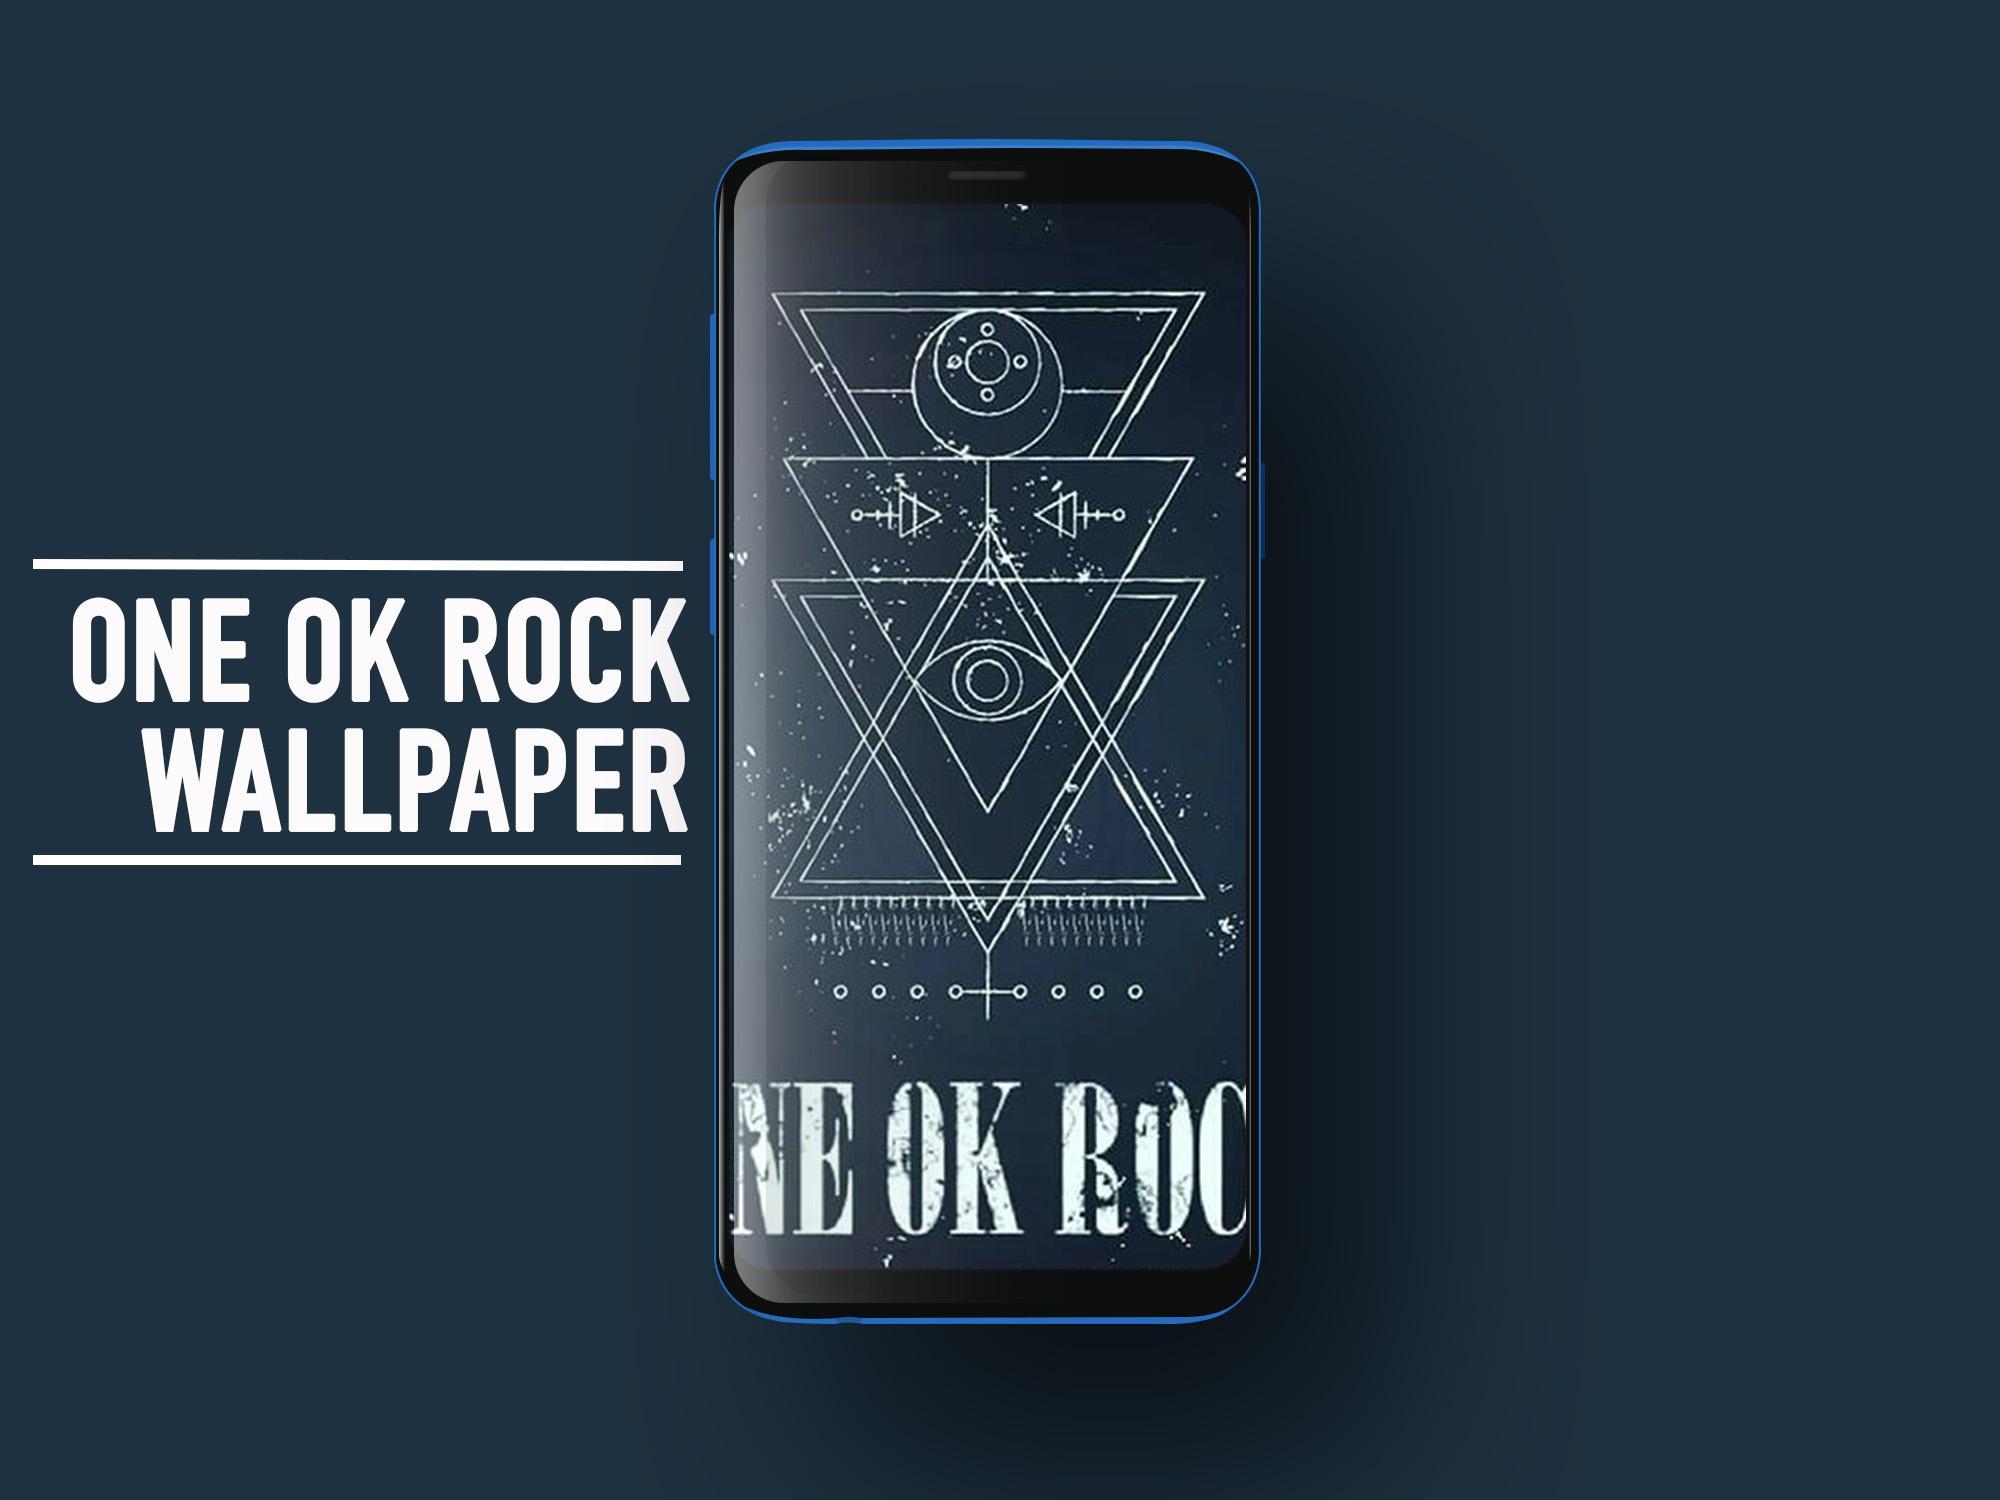 One Ok Rock Wallpapers Fans Hd安卓下载 安卓版apk 免费下载